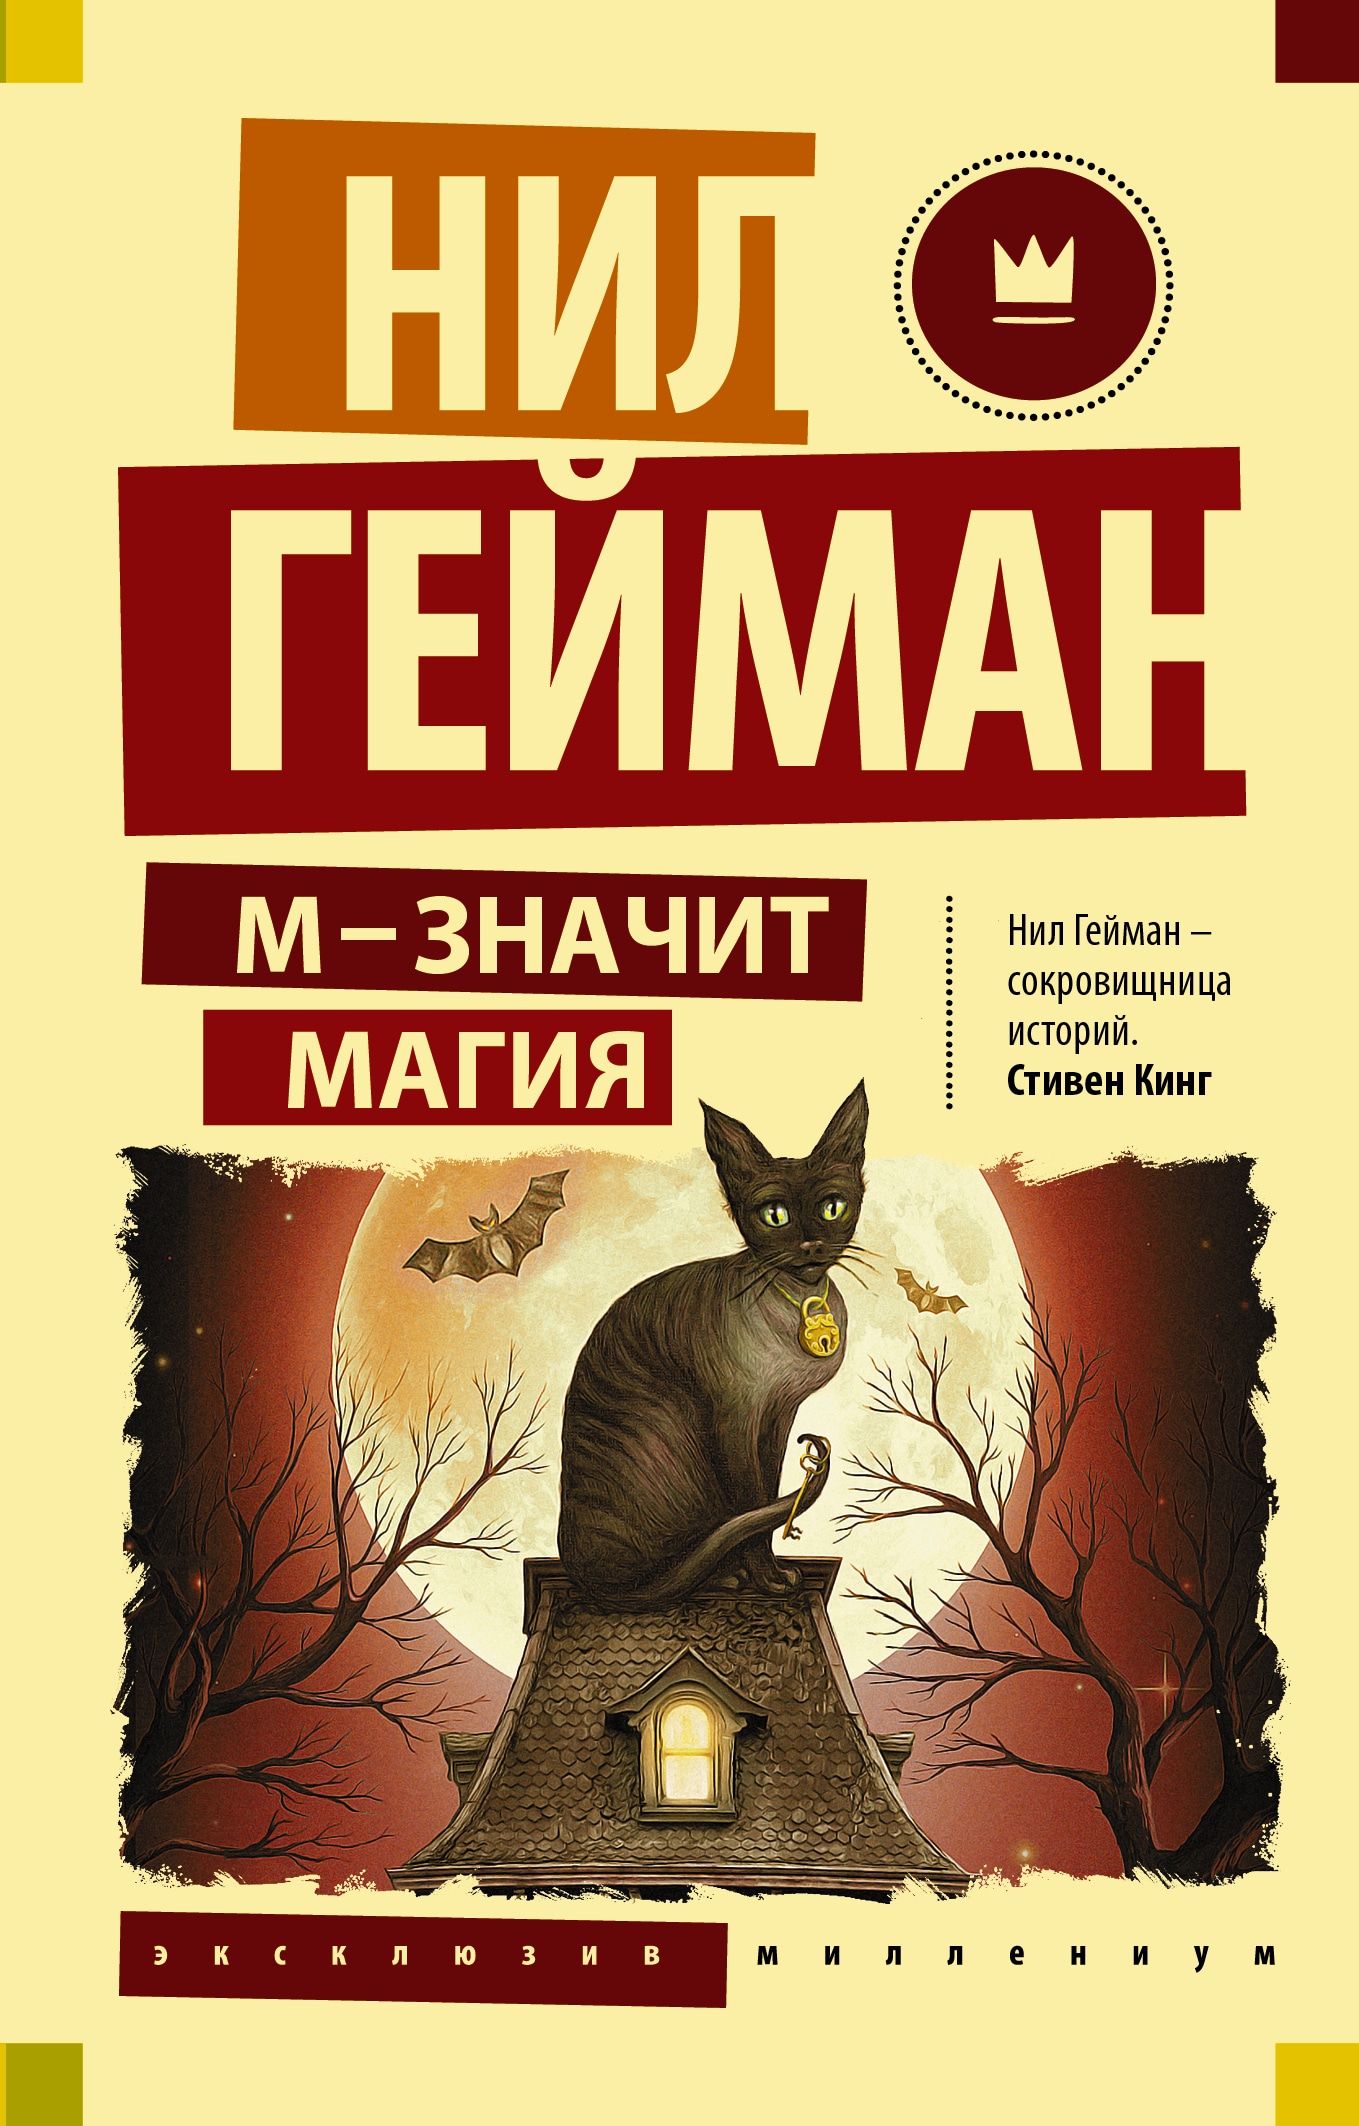 Book “М - значит магия” by Нил Гейман — September 15, 2021